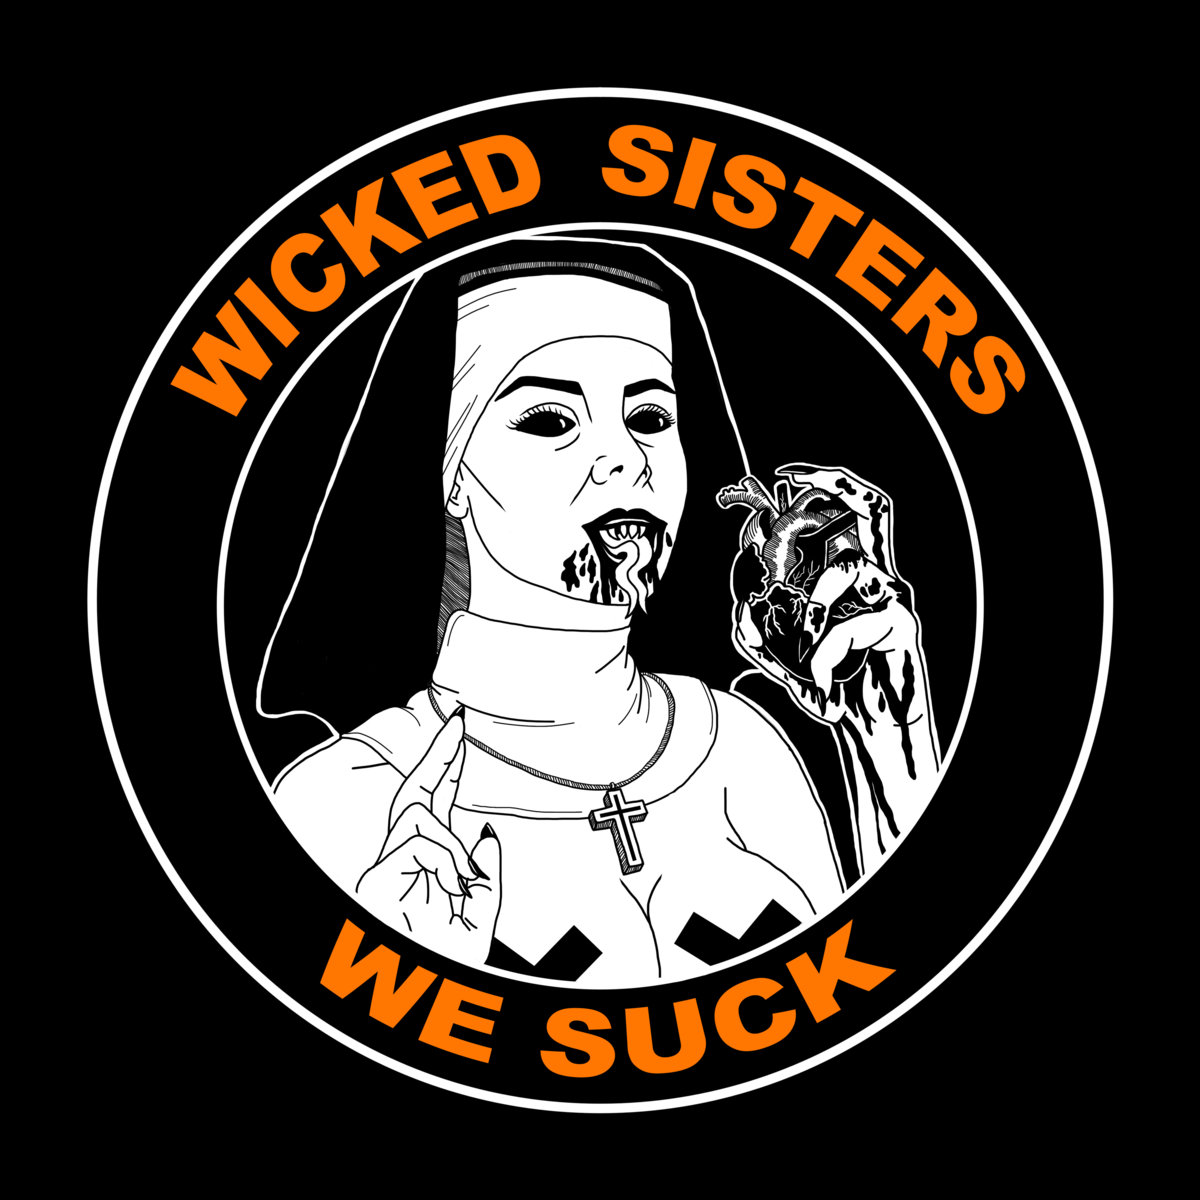 Wicked Sisters 2018 - We Suck